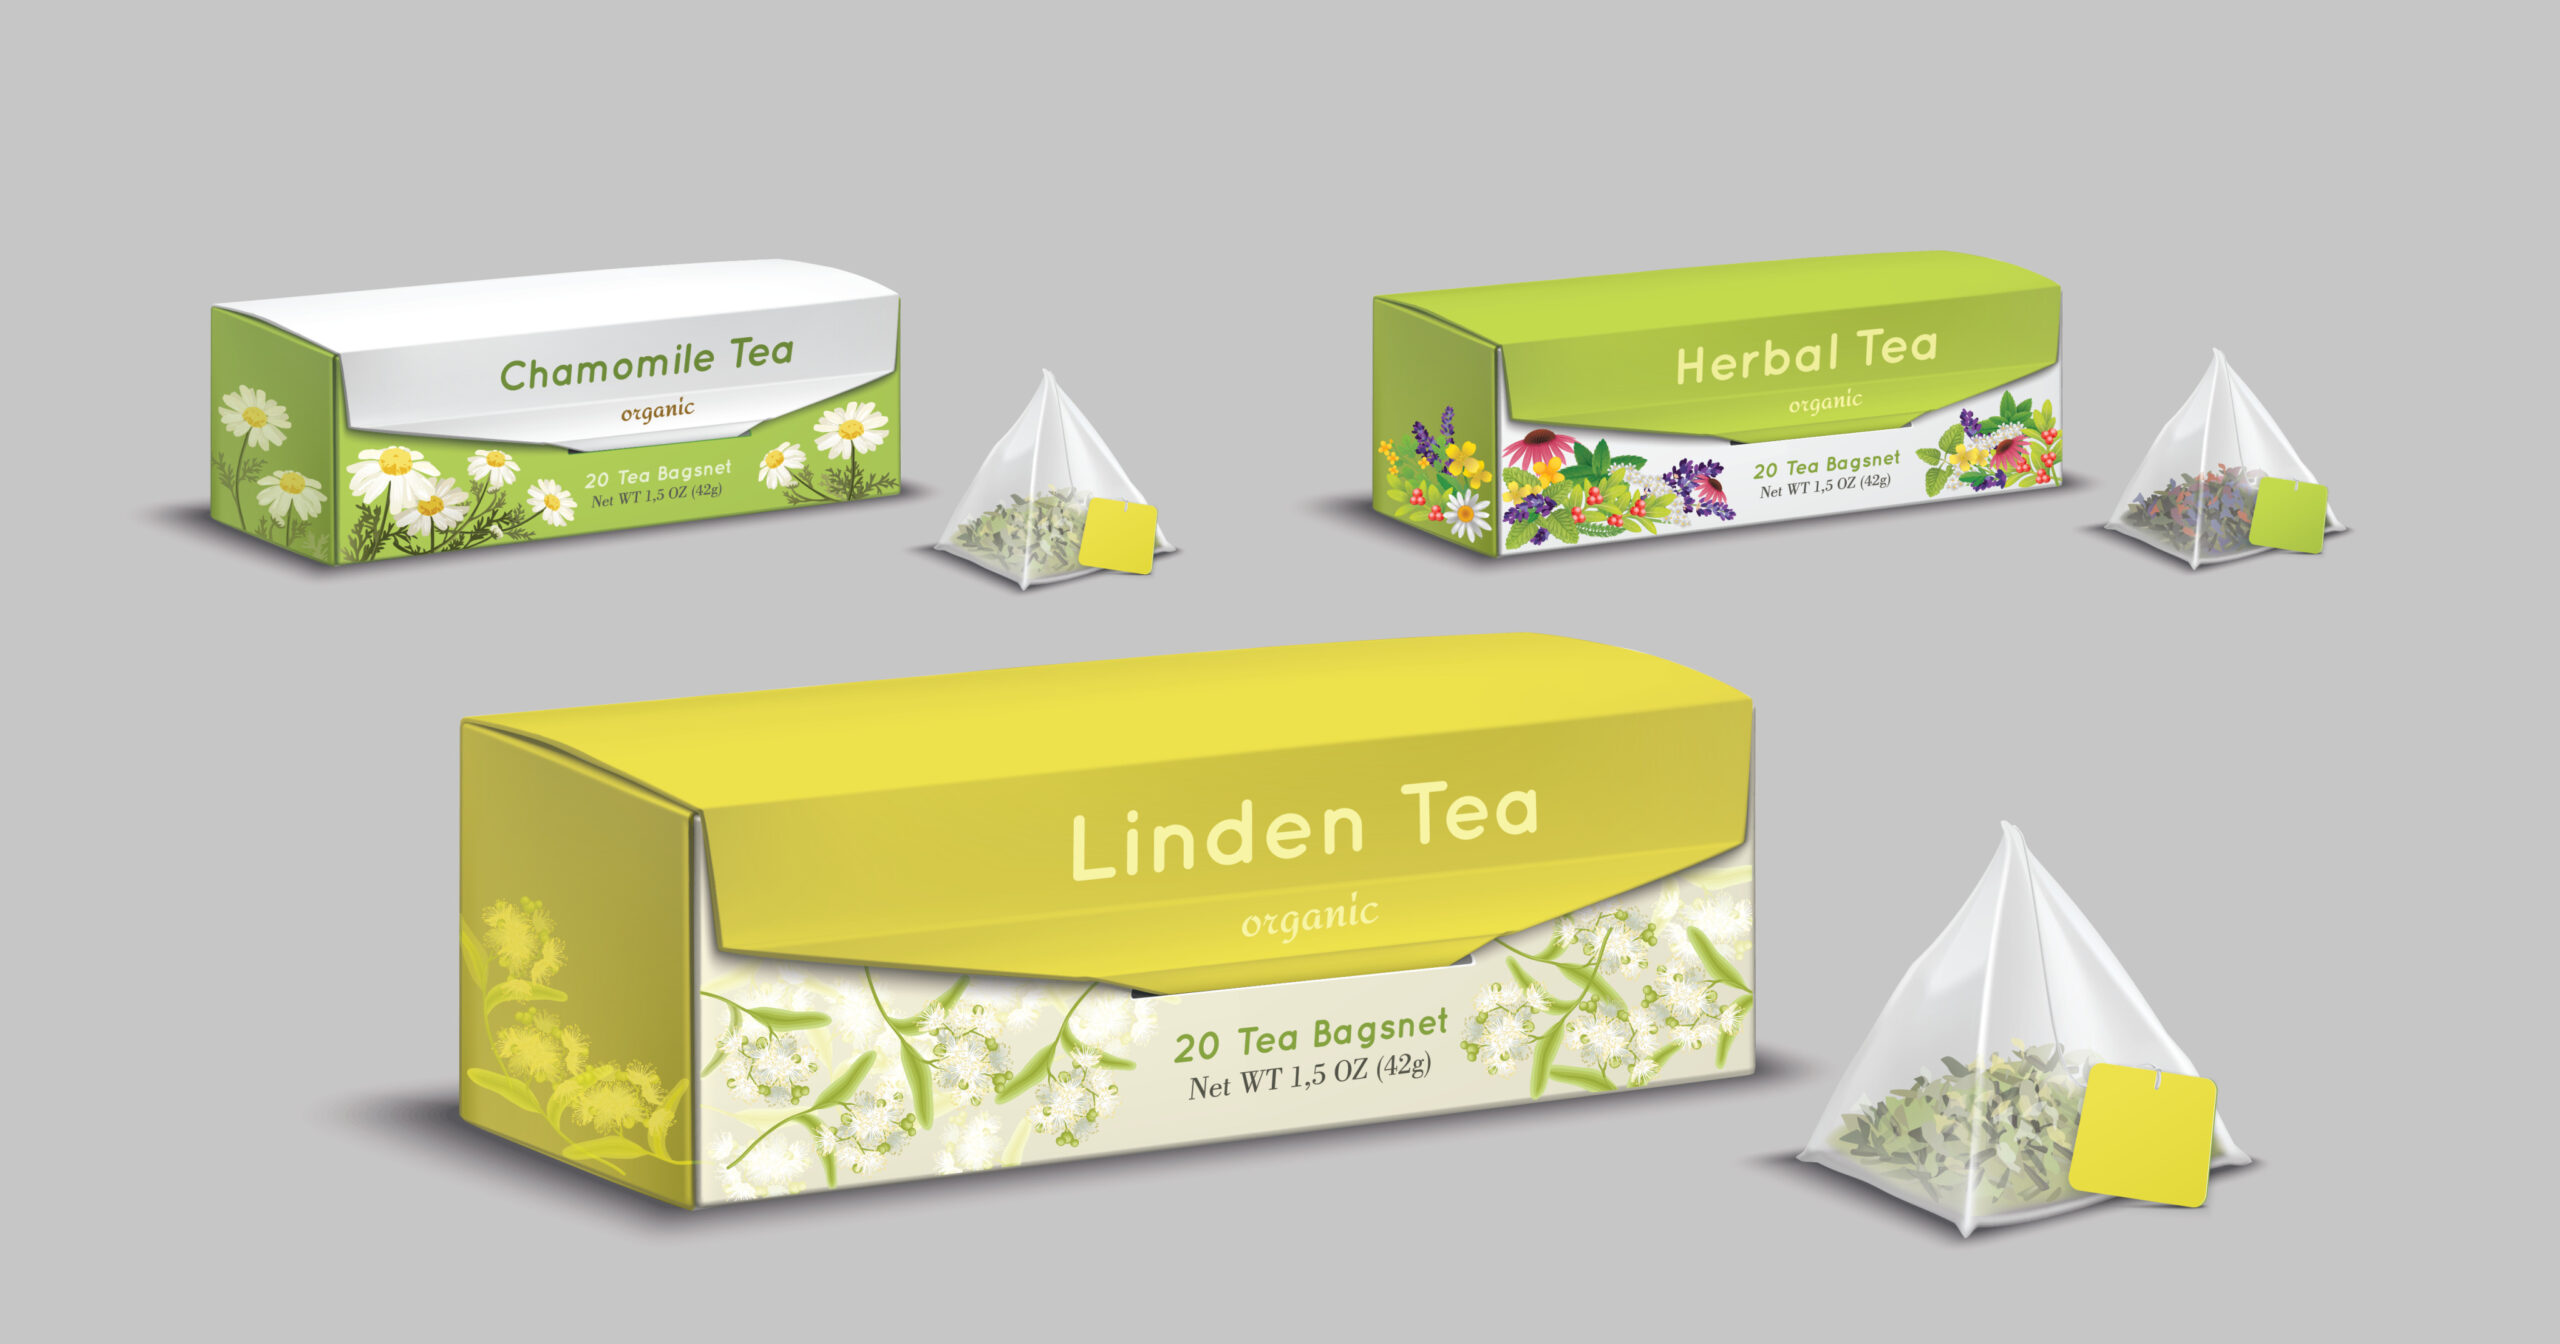 Herbal Tea from Future Generation Co., Ltd